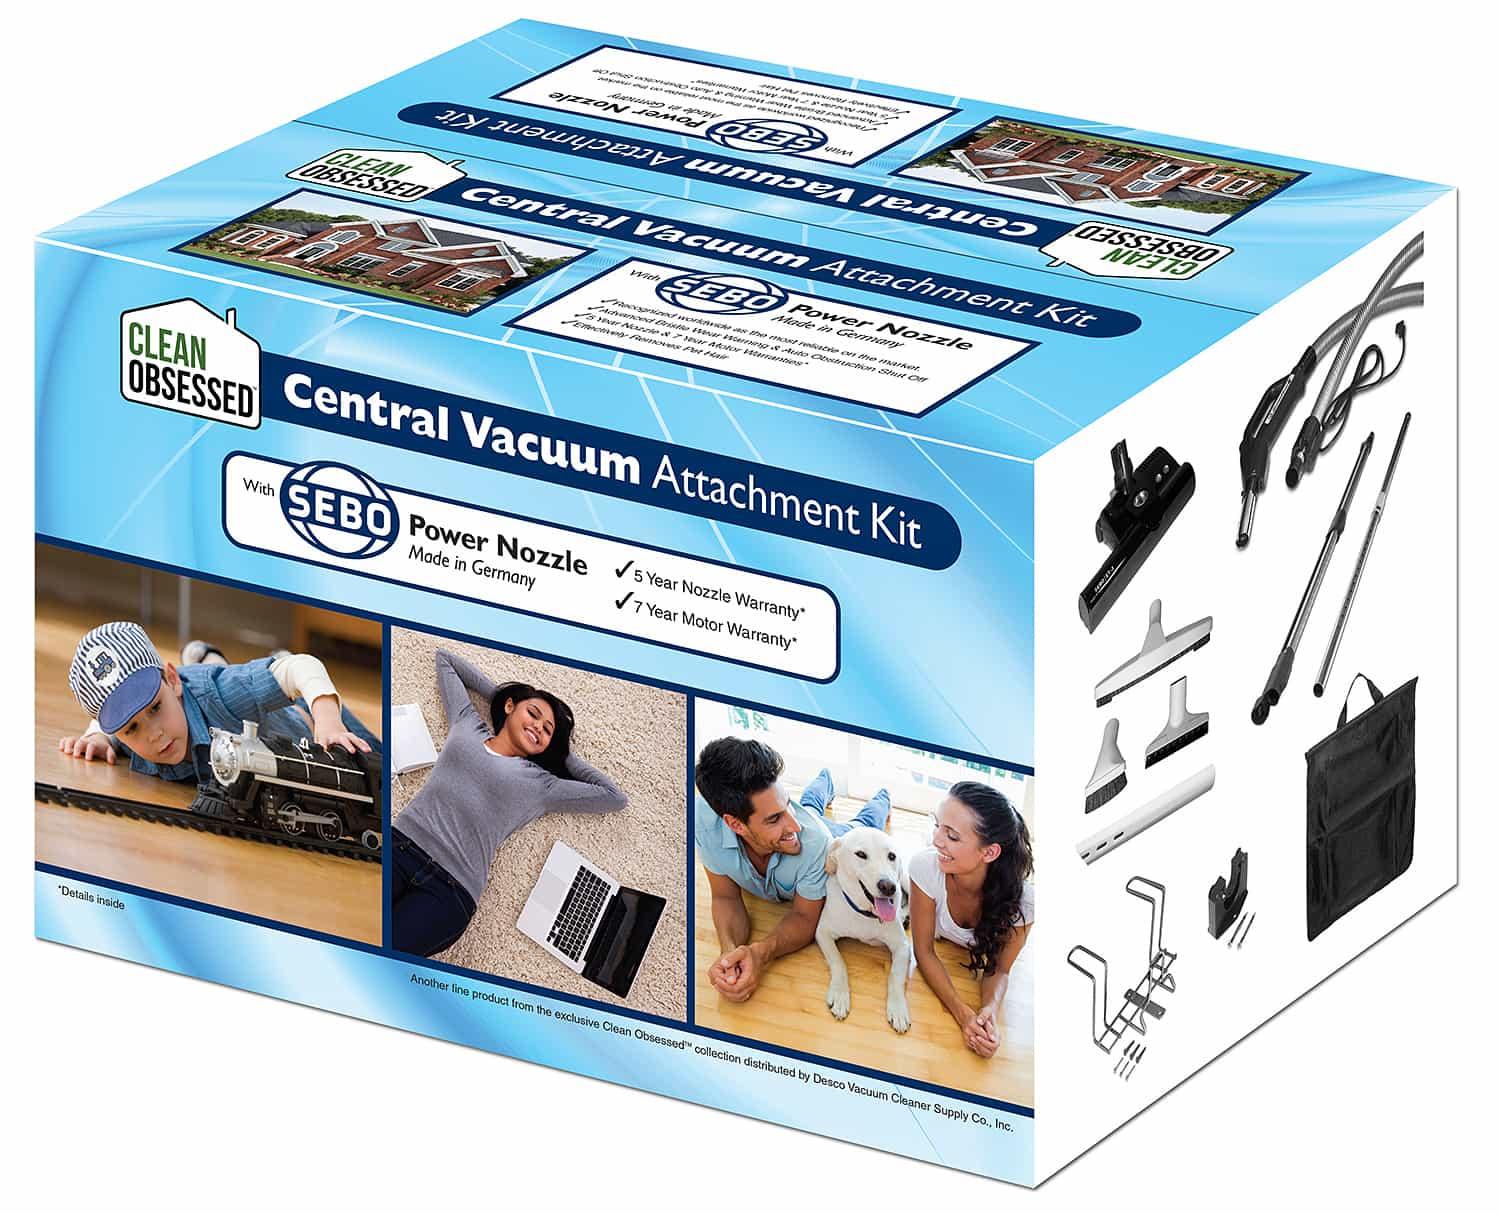 GVac Central Vacuum Attachment Kits